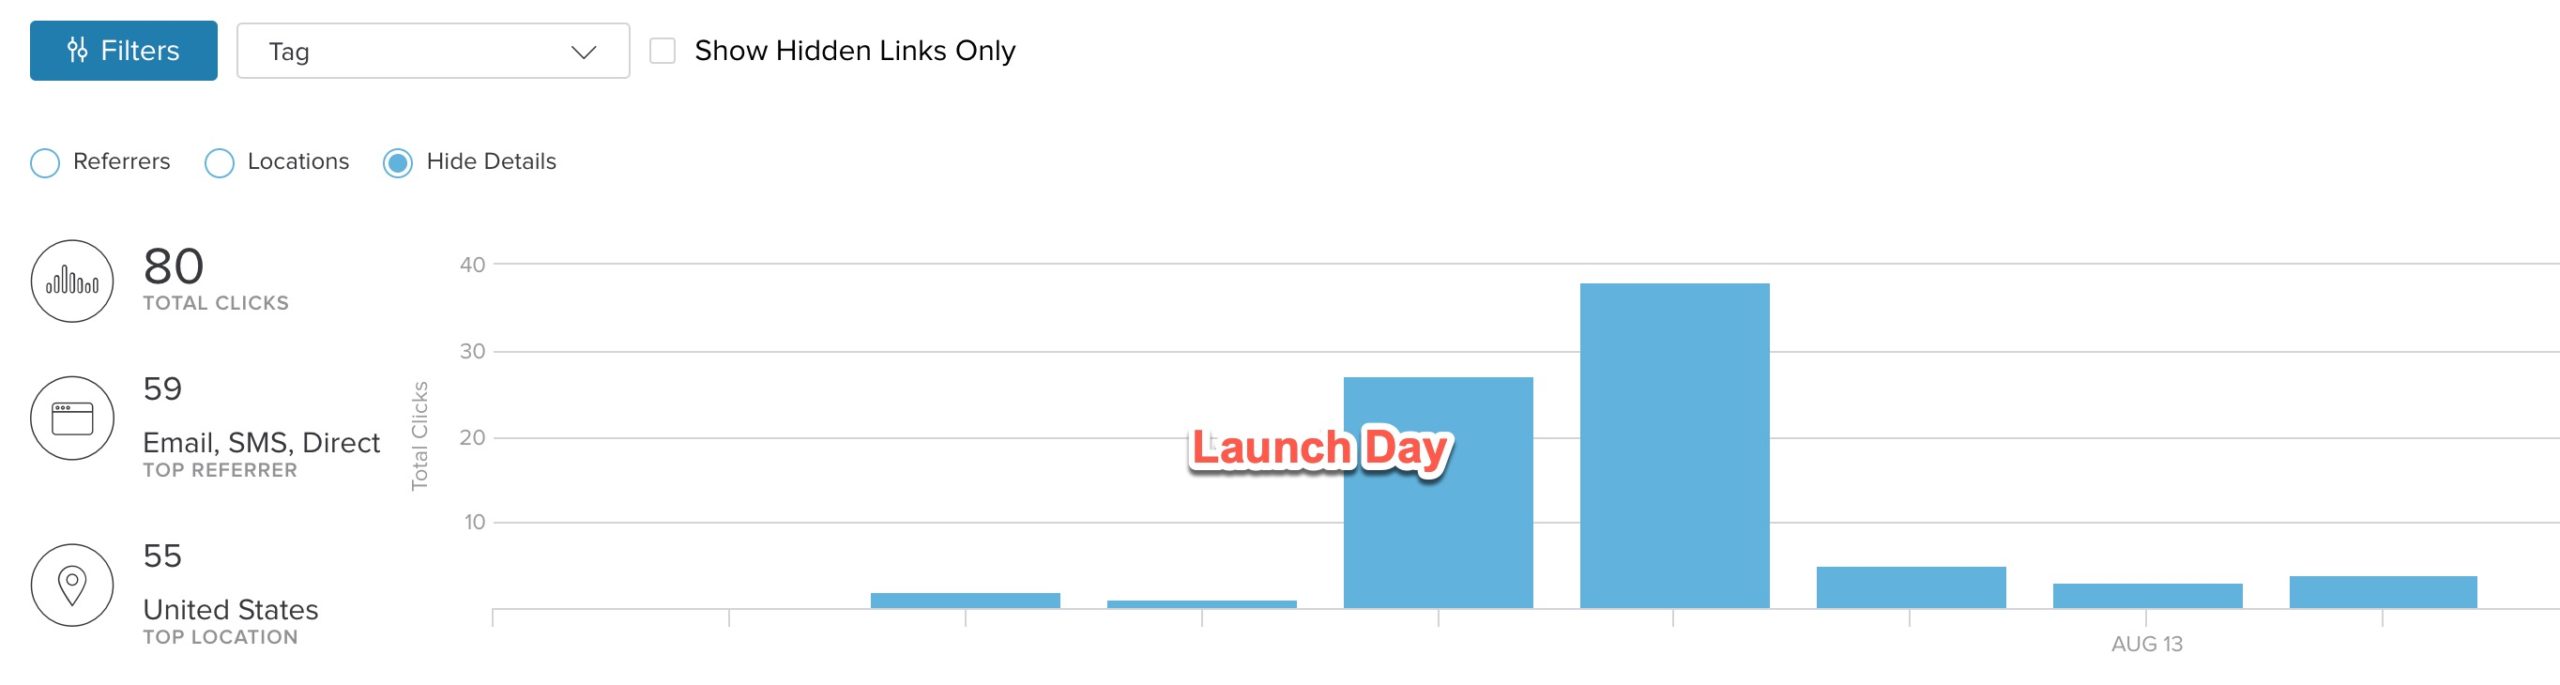 Launch day statistics